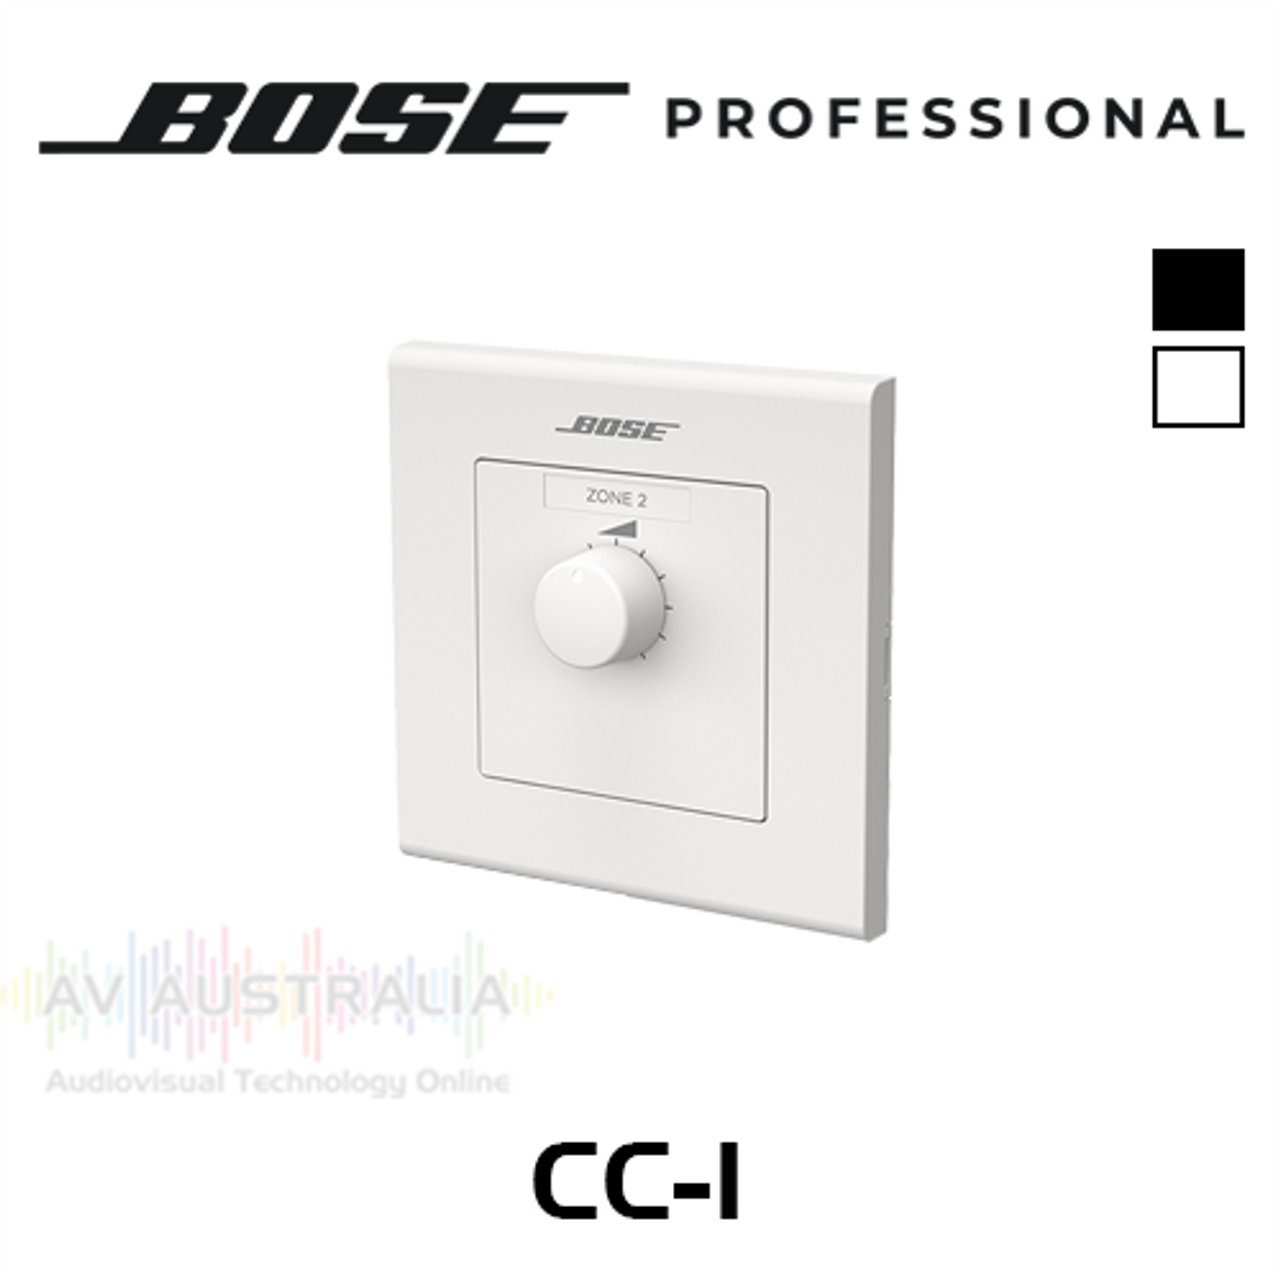 Bose Pro ControlCenter CC-1 Volume Zone Controller